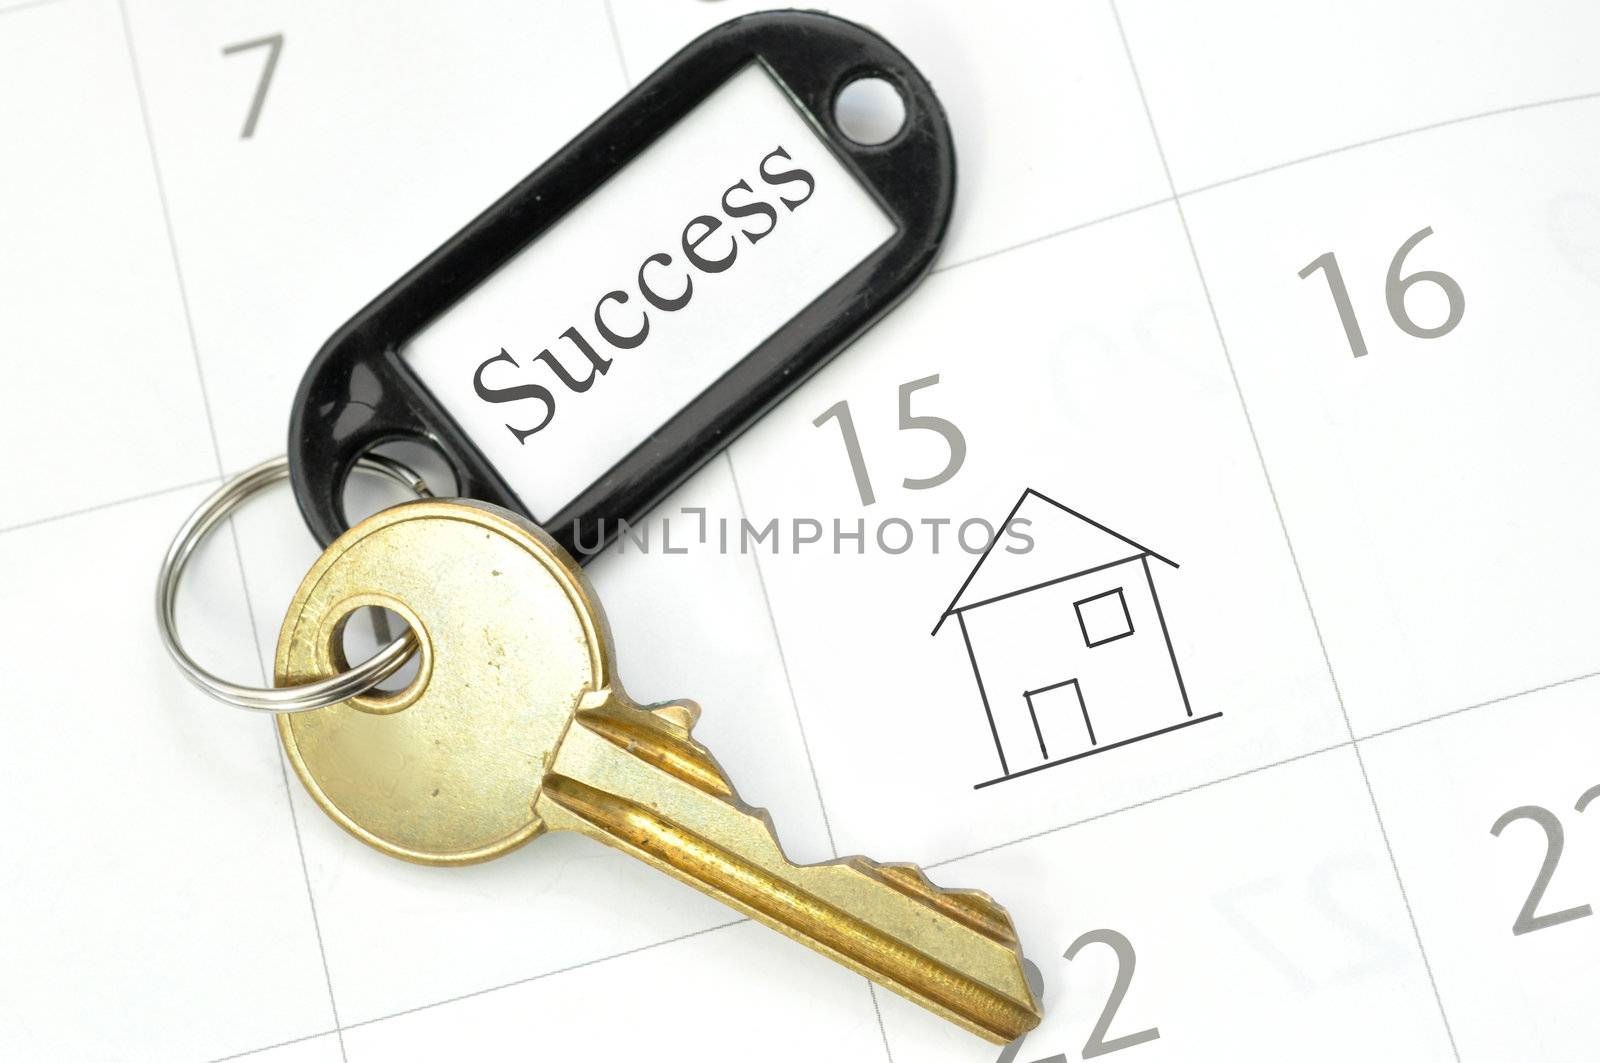 Keys to new home by unikpix